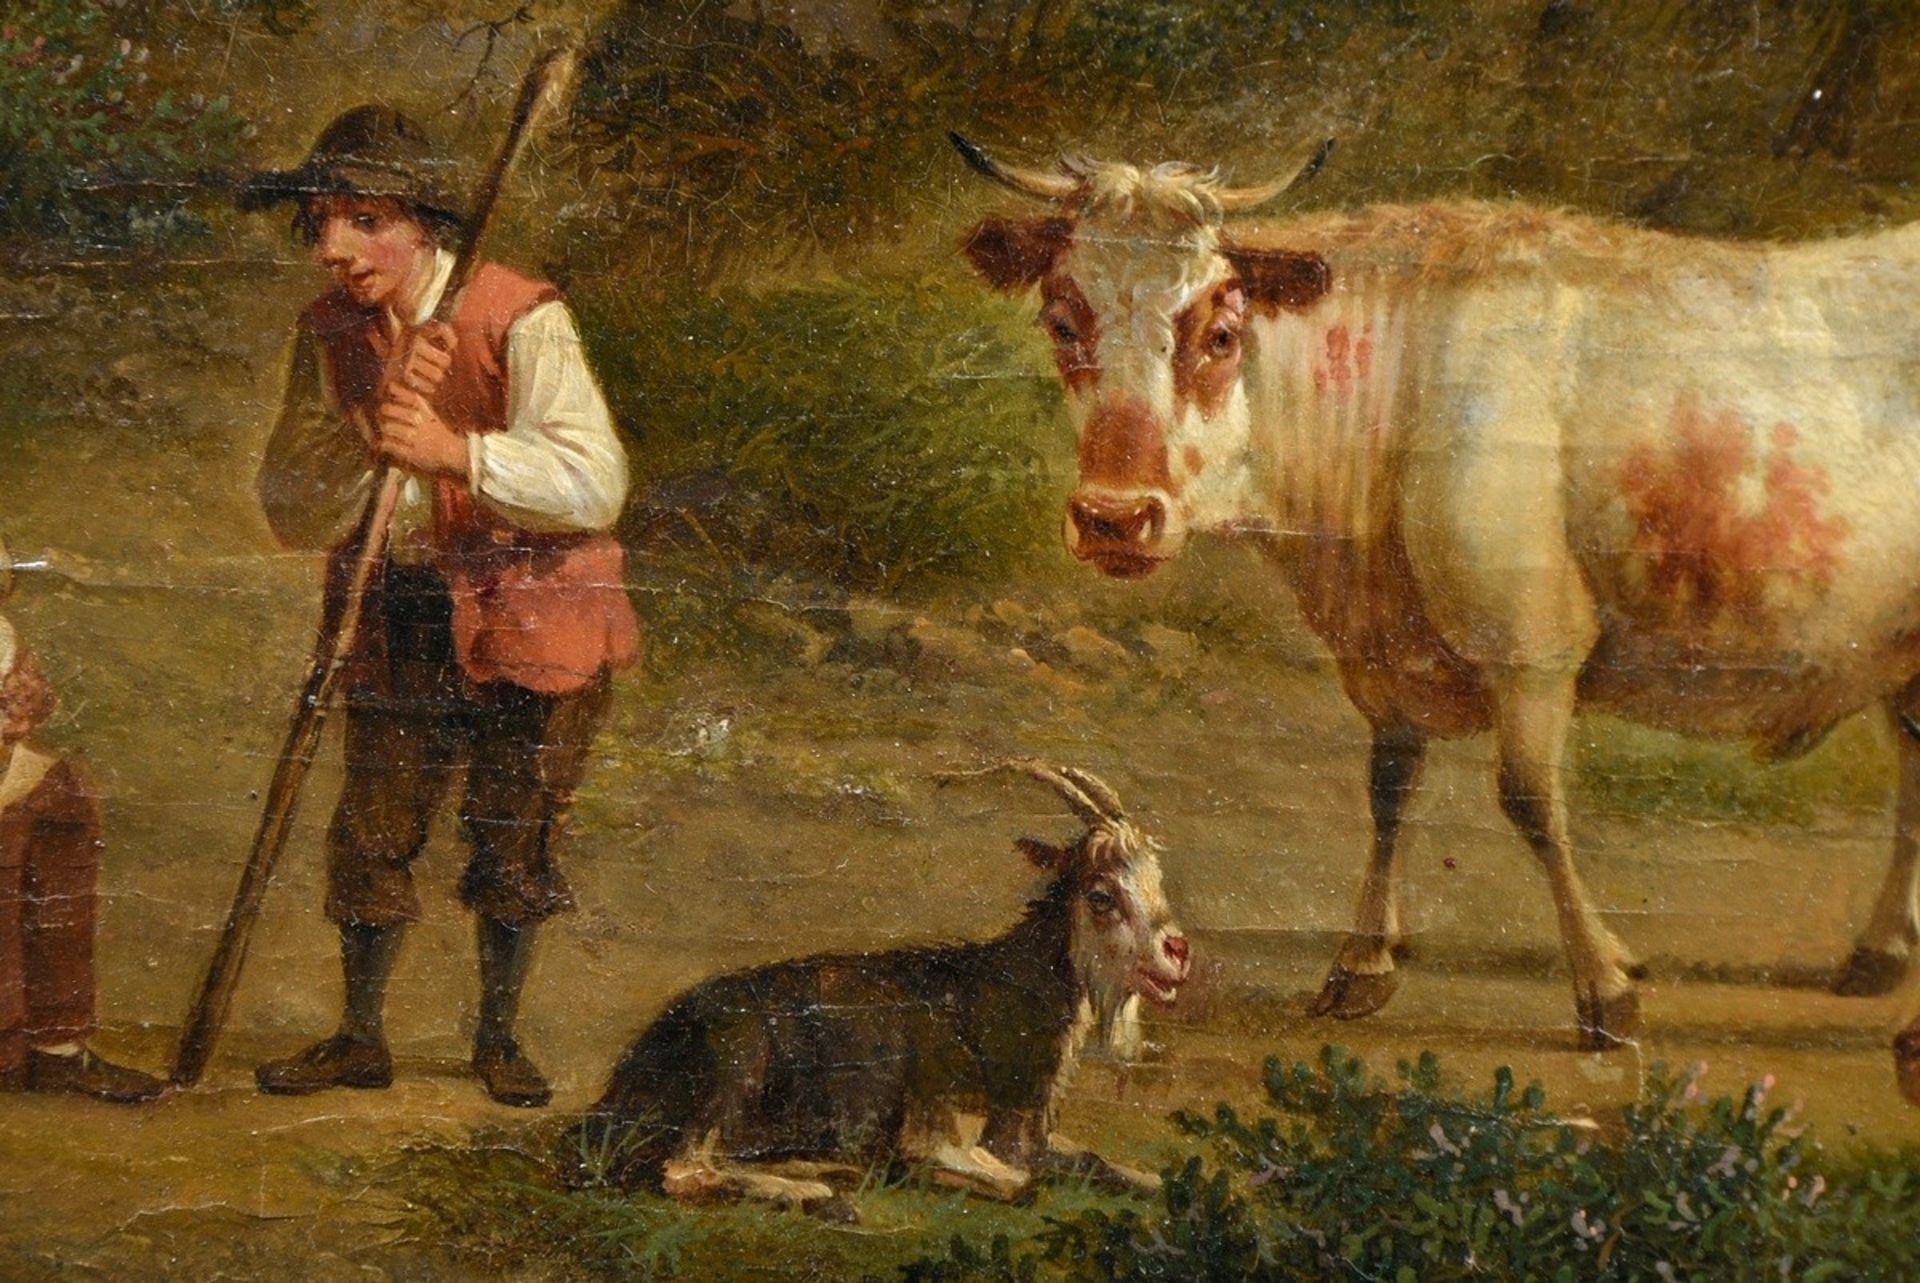 Antonissen, Henricus Josephus (1737-1794) "Landscape with Shepherds and Their Herd" 1779, oil/wood, - Image 4 of 7